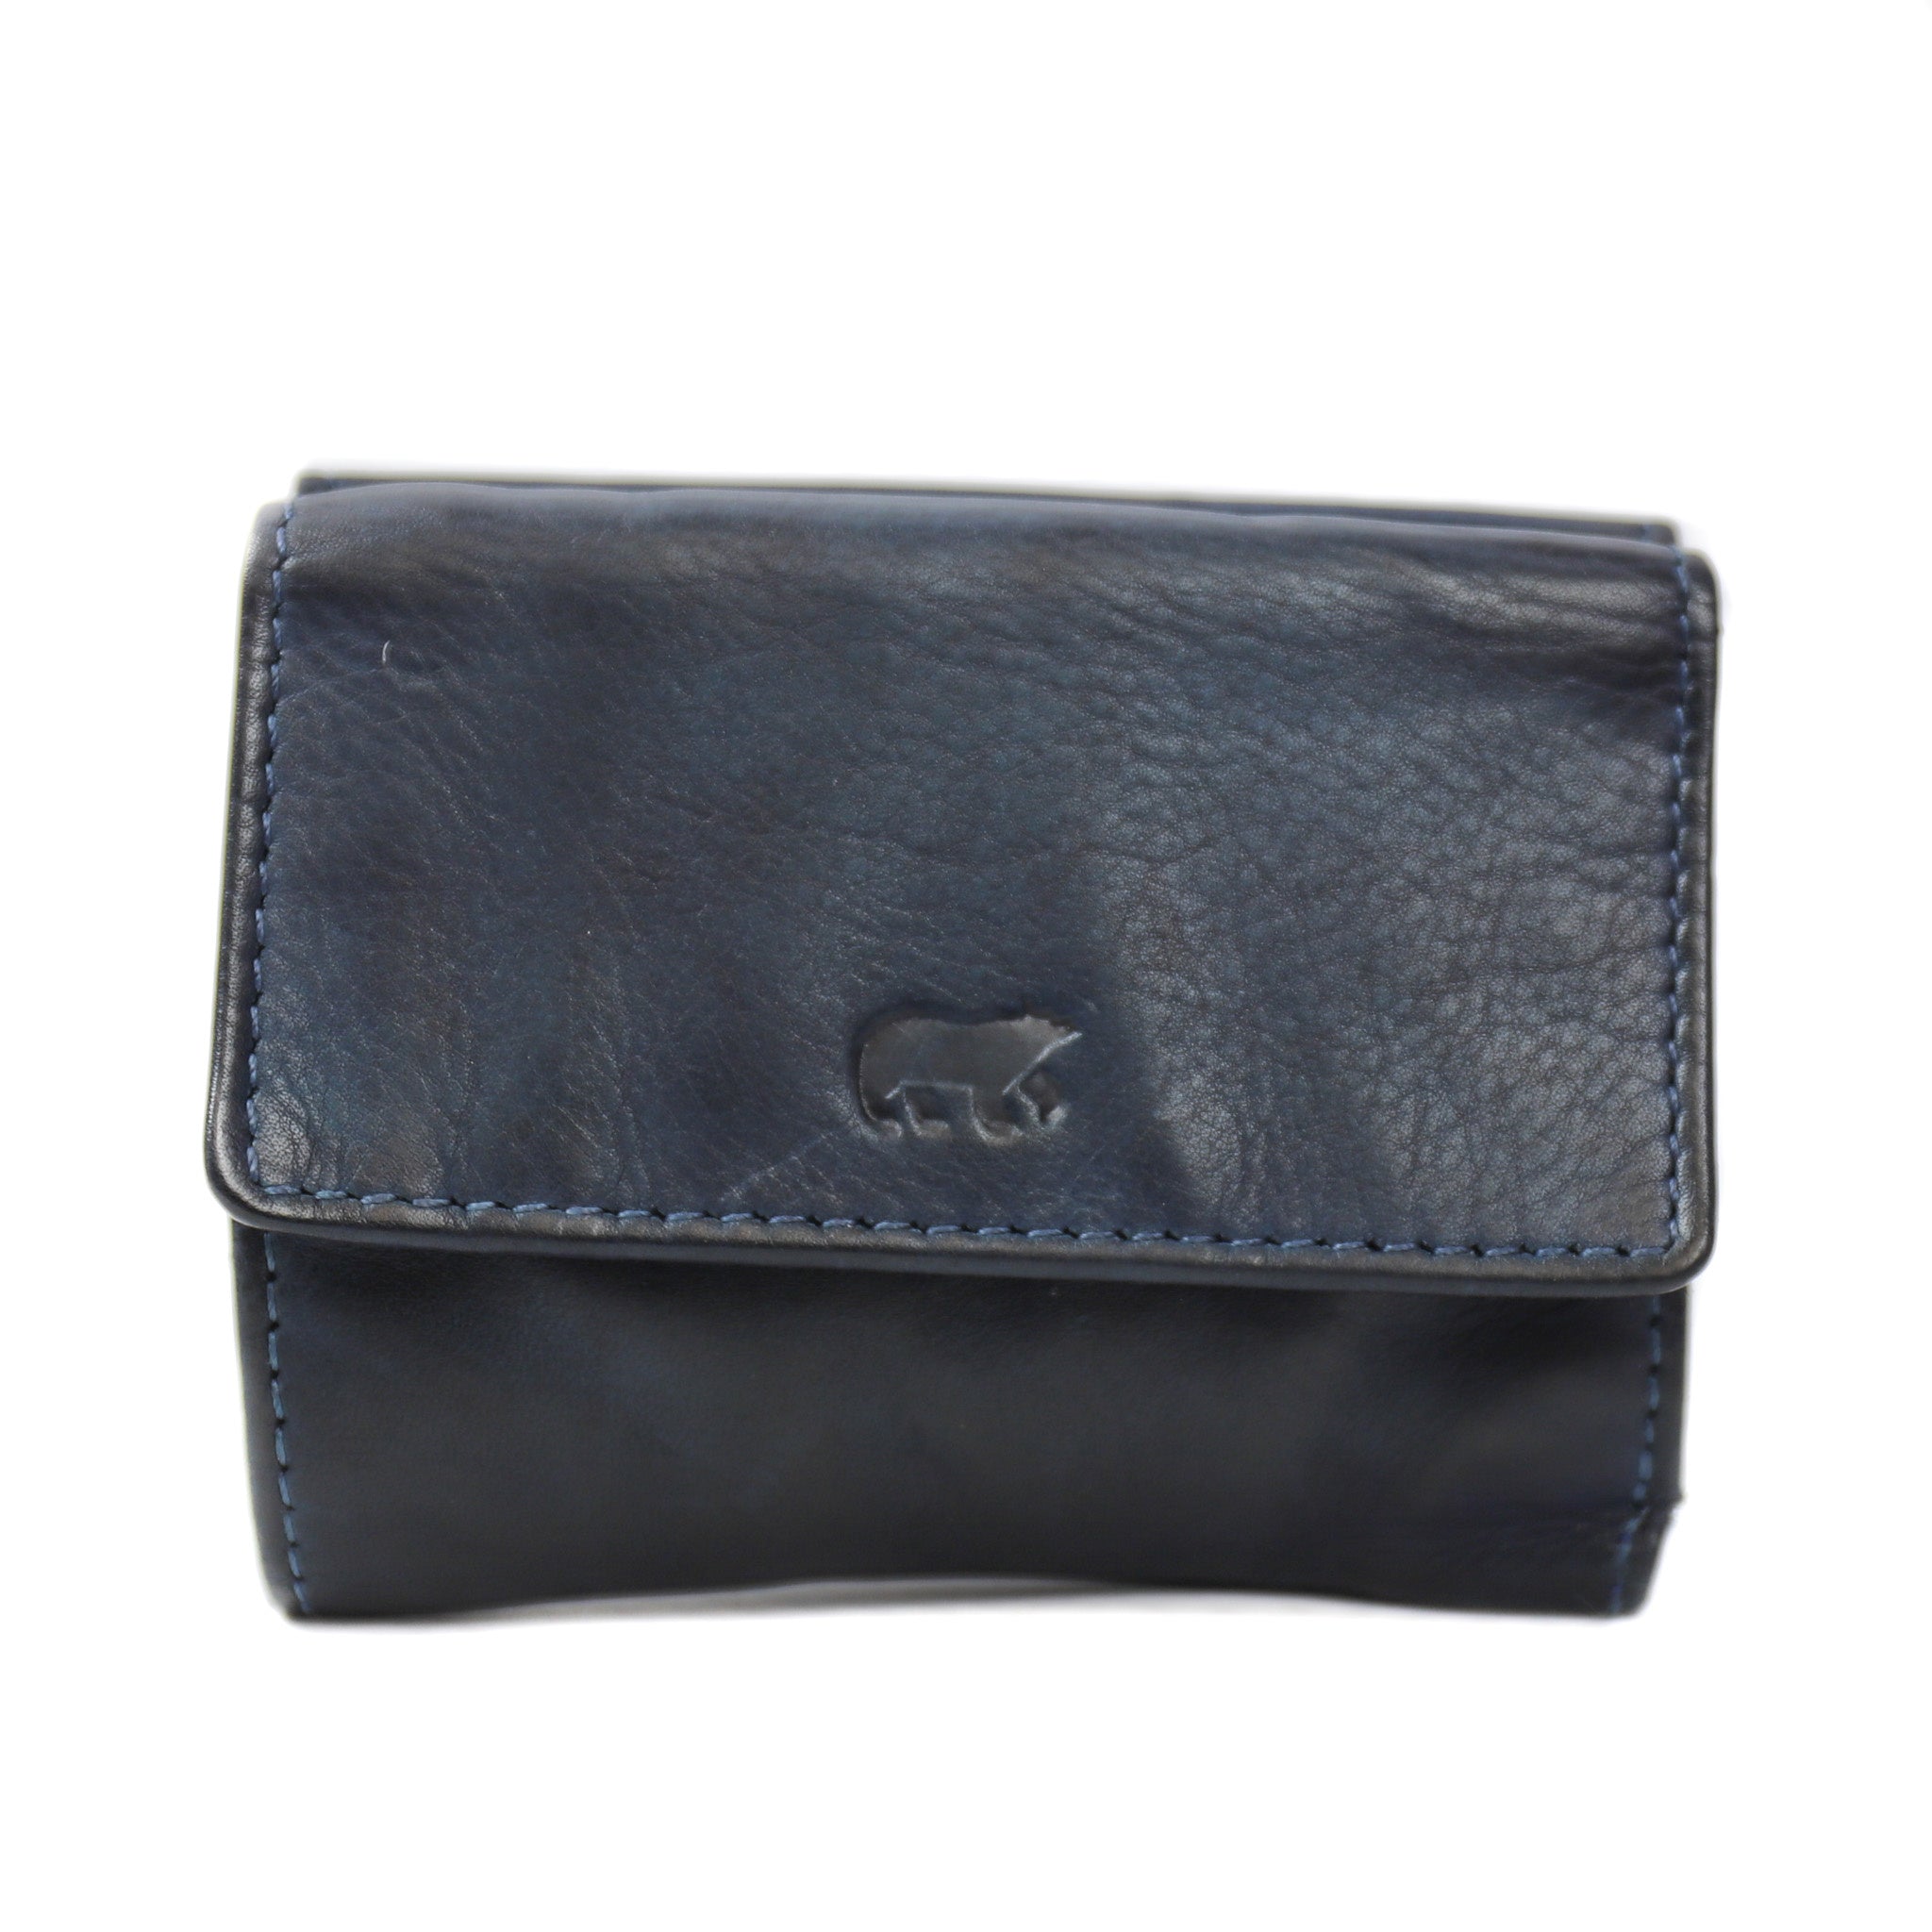 Wallet 'Jolie' dark blue - CL 14618